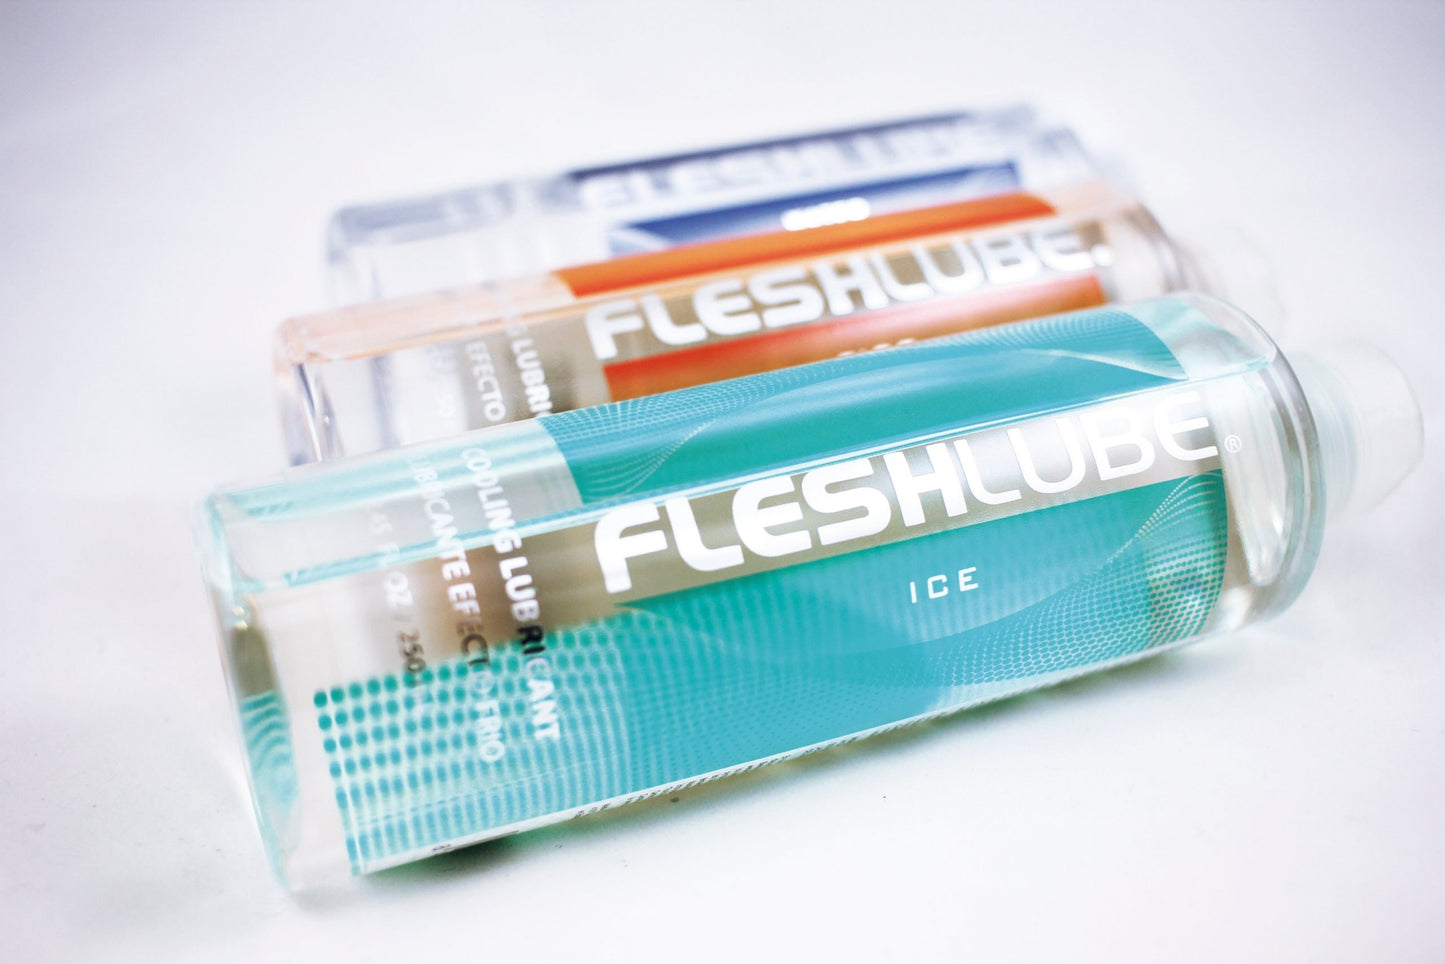 Fleshlube Ice 8 oz (Single)